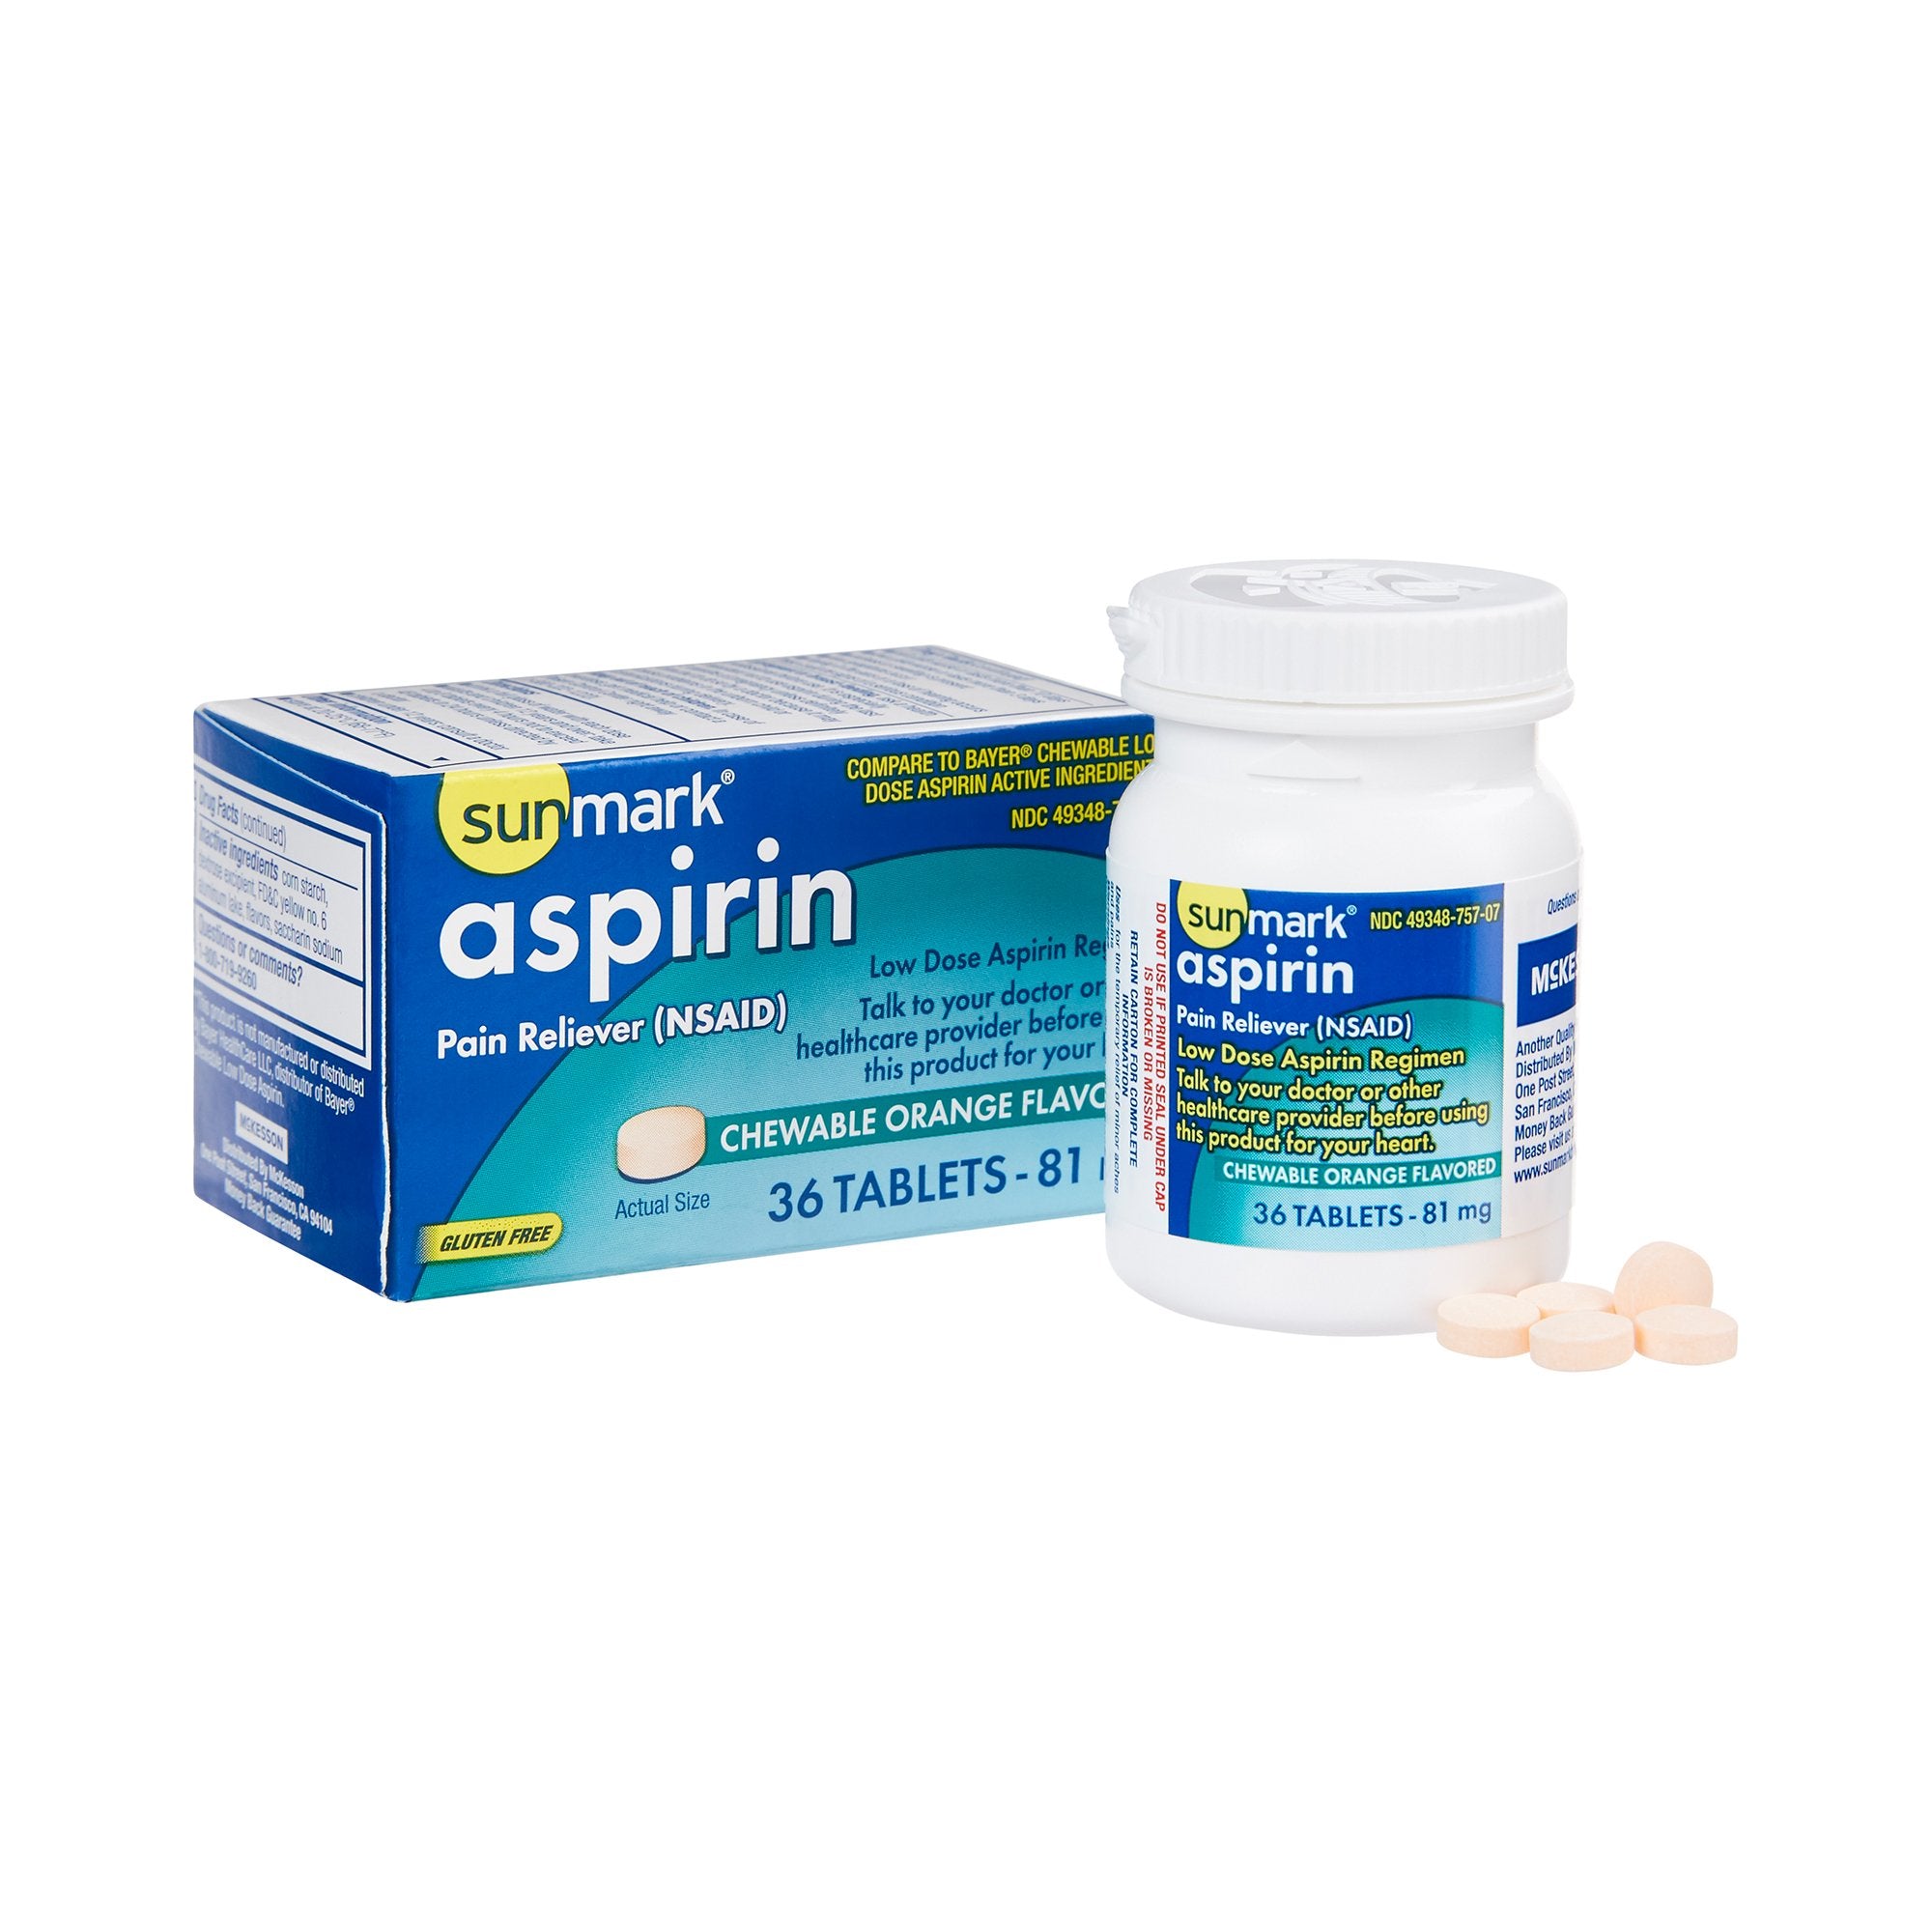 Pain Relief sunmark 81 mg Strength Aspirin Chewable Tablet 36 per Box